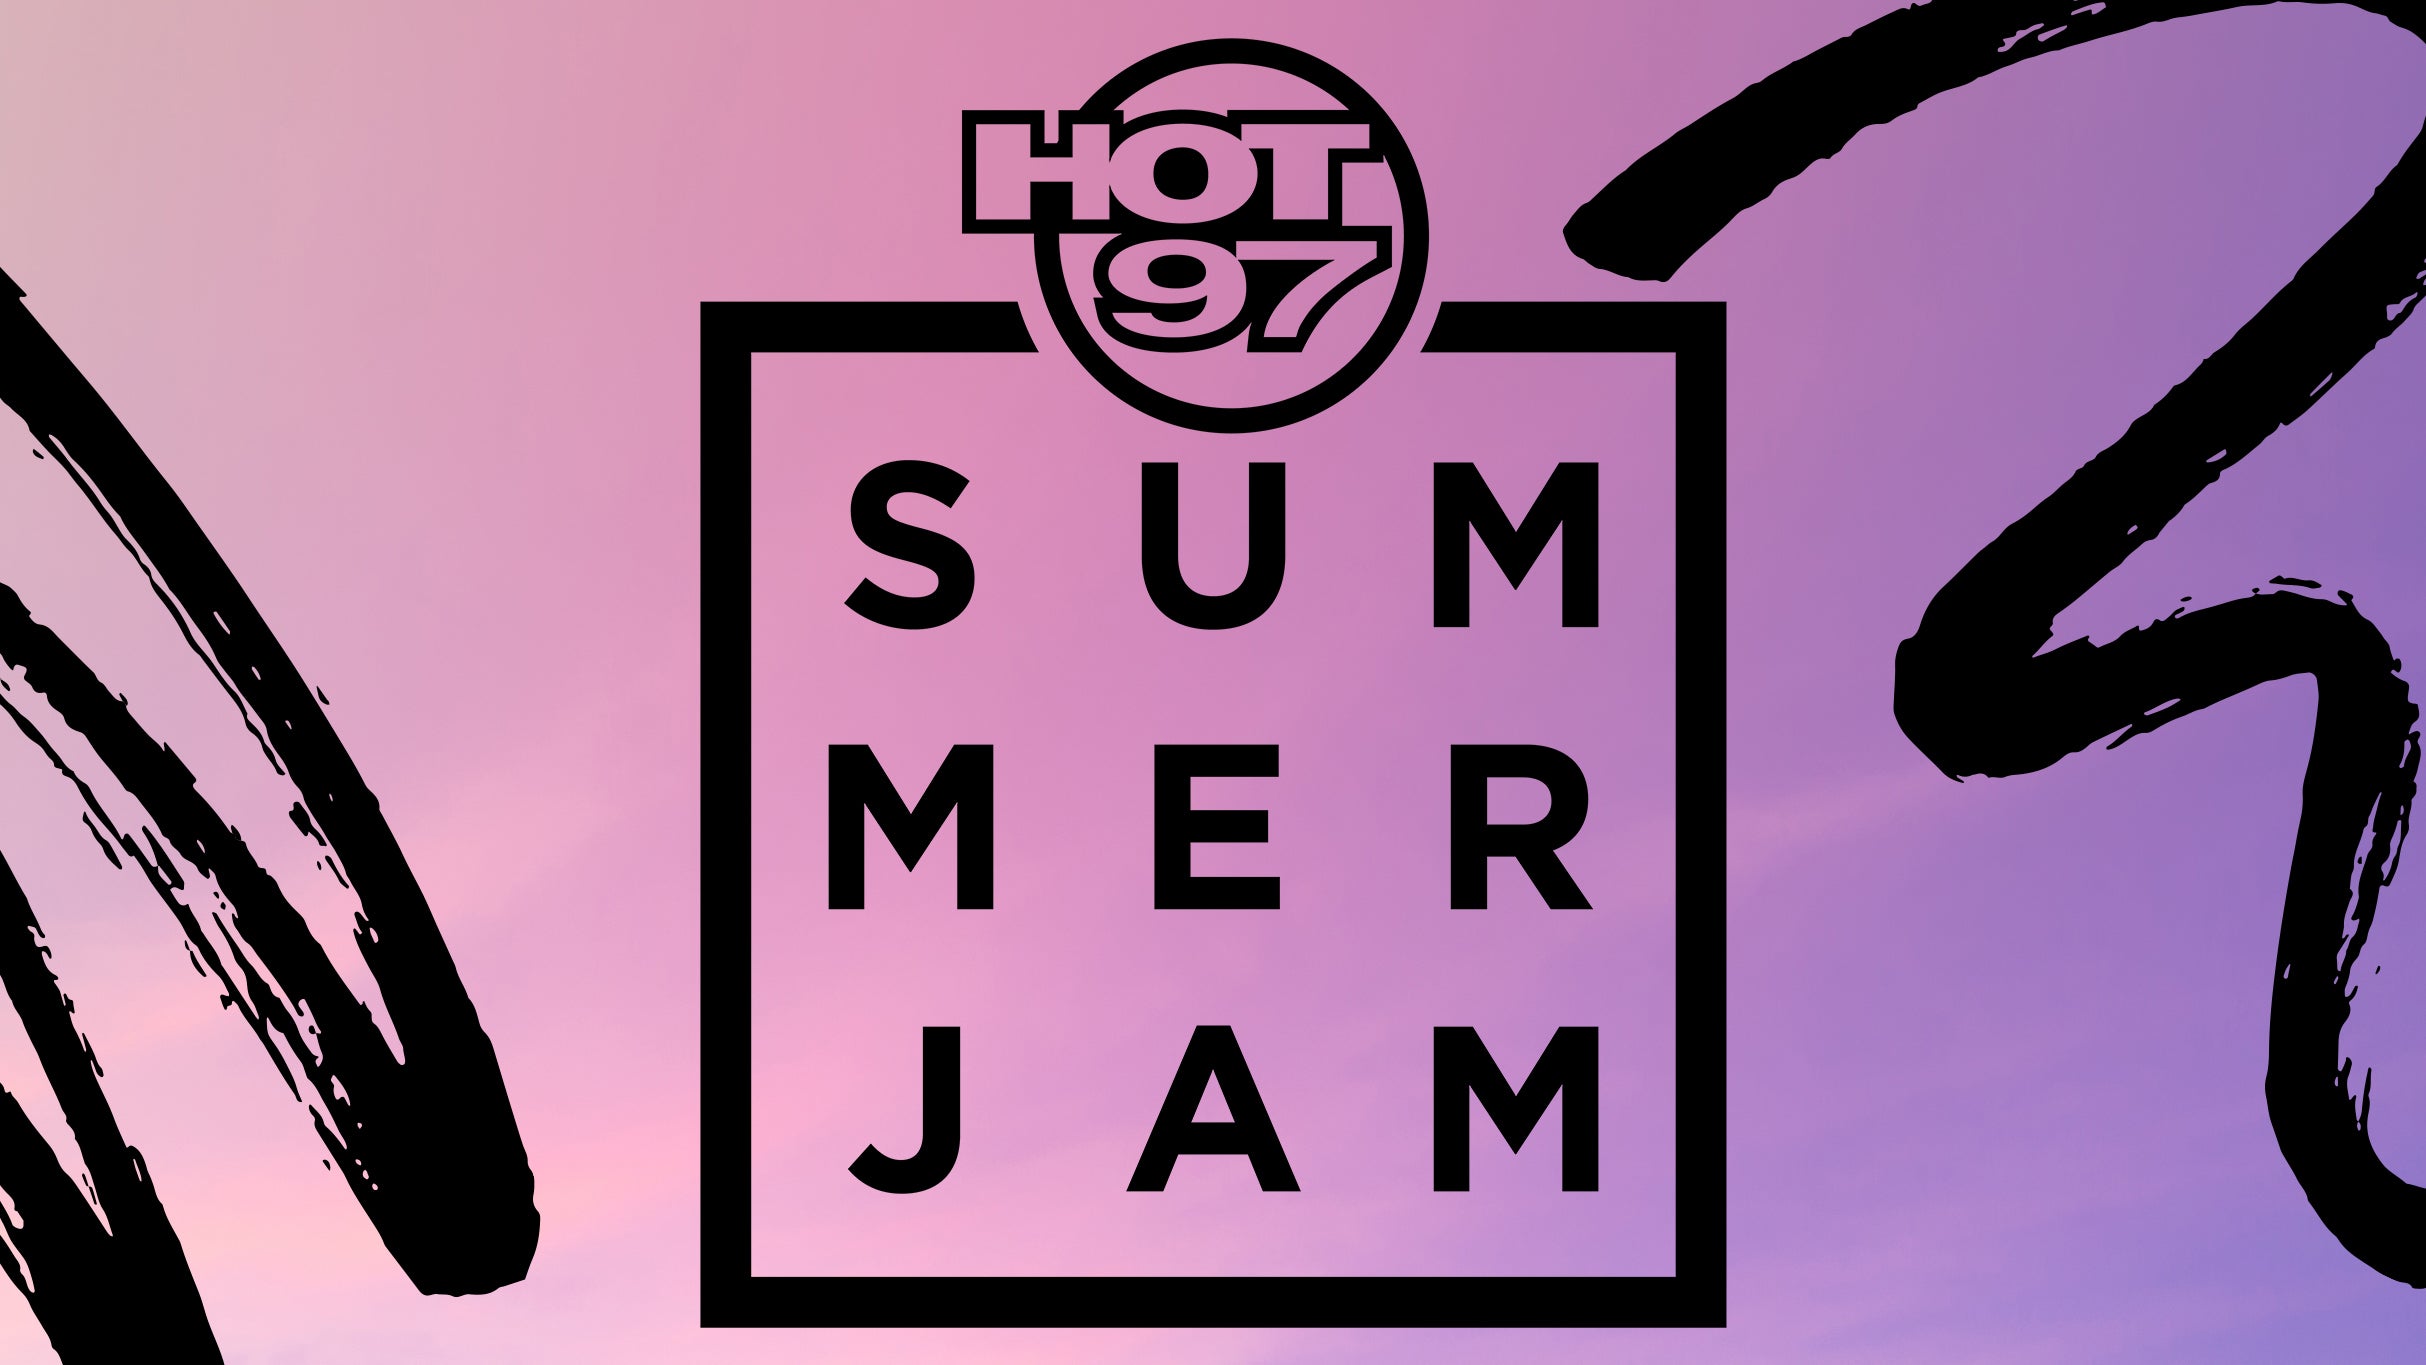 HOT 97 Summer Jam in Belmont Park - Long Island promo photo for Venue presale offer code